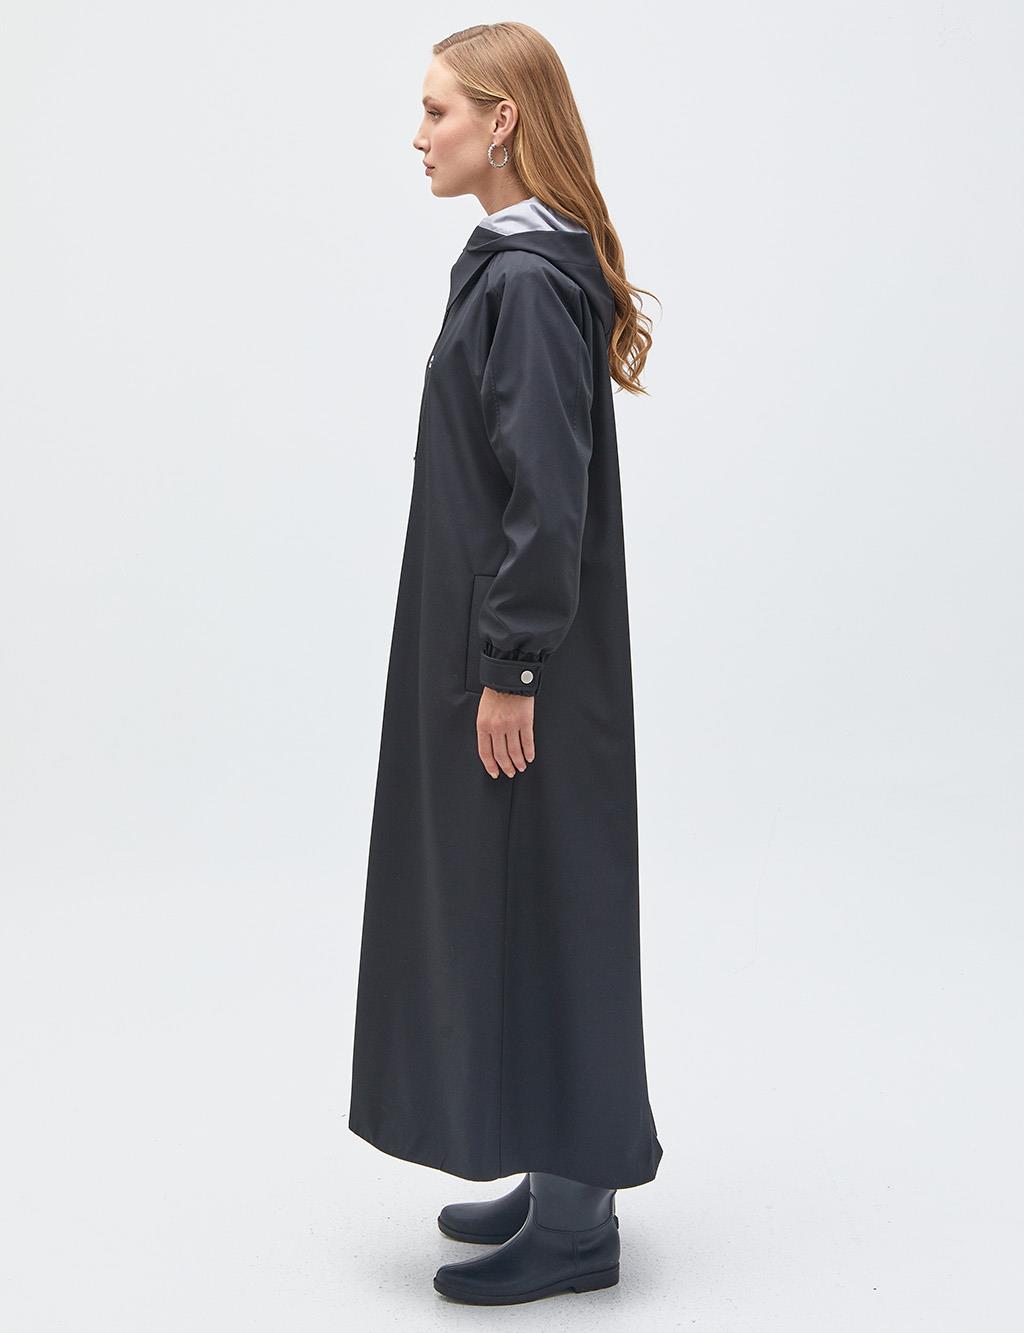 Hooded Long Topcoat Black